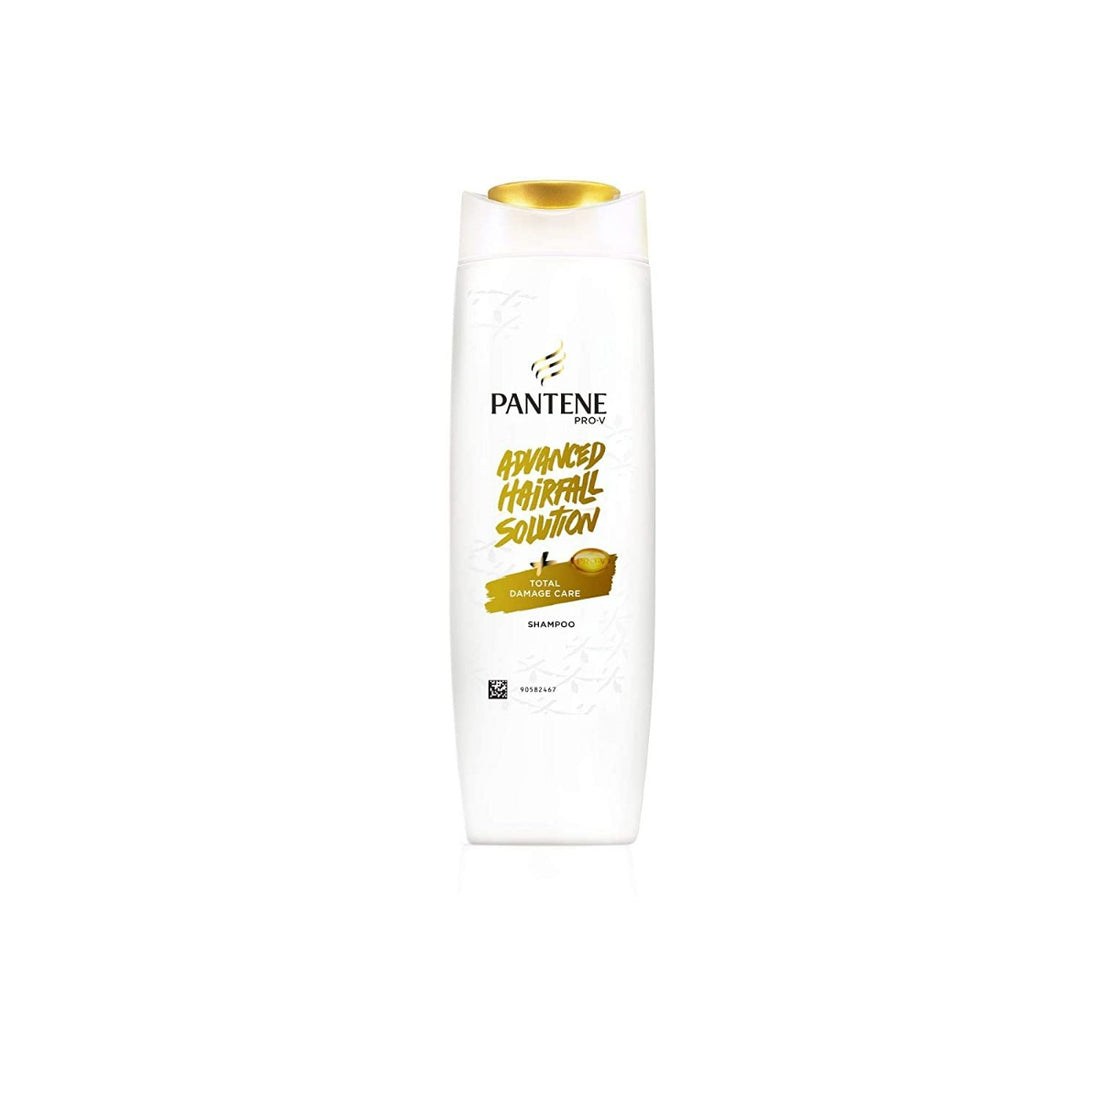 Pantene Advanced Hairfall Solution Anti-Hairfall Total Damage Care Shampoo for Women (180ml)